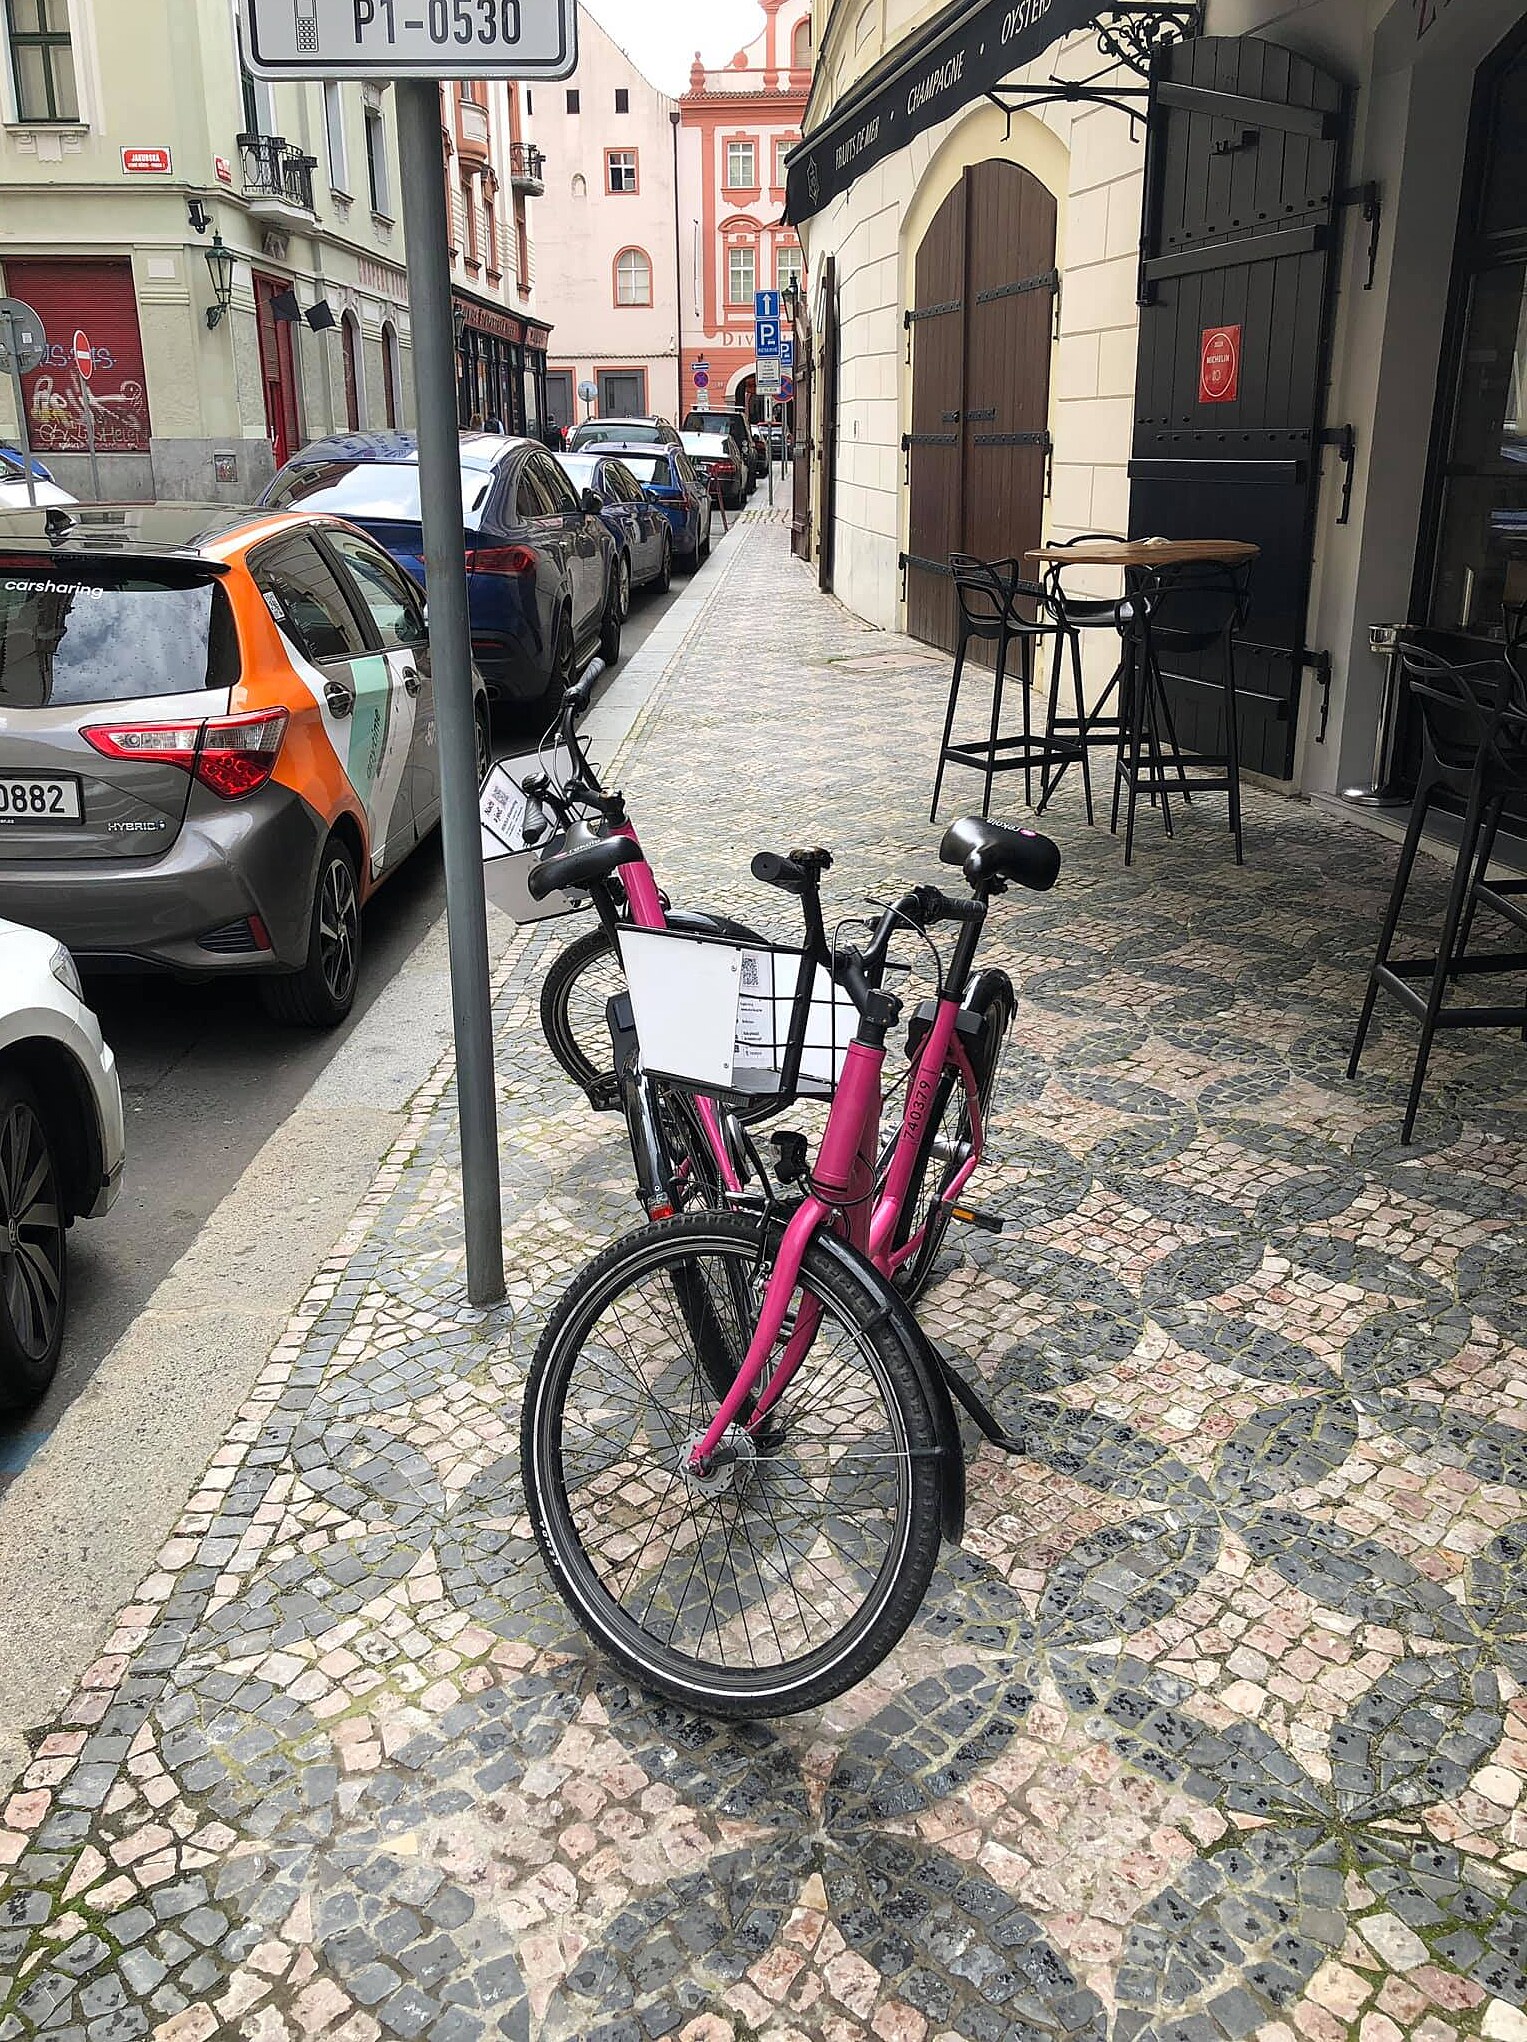 Some don't caress shared bike parking.